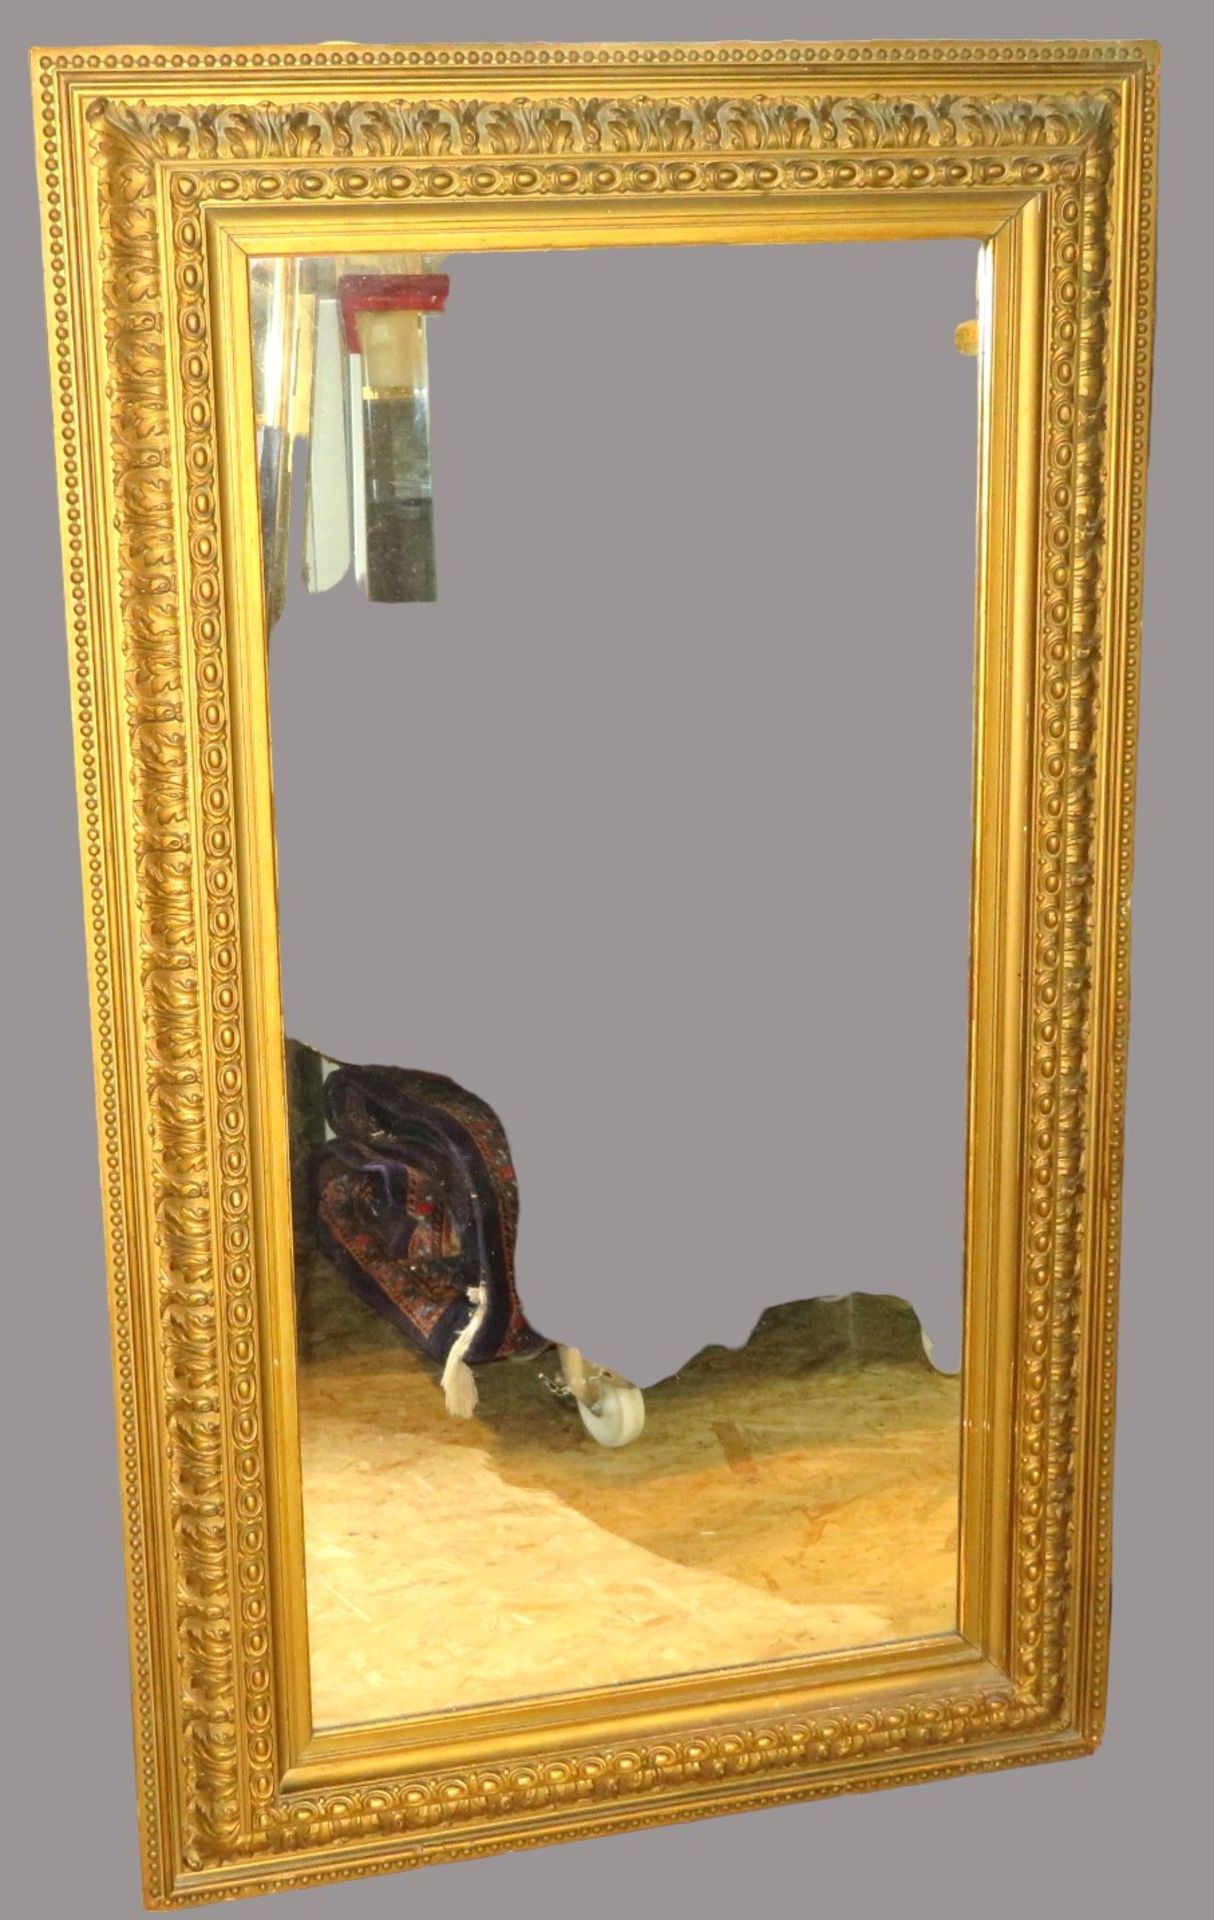 Spiegel, 19. Jahrhundert, Stuck vergoldet, 142 x 84 cm.